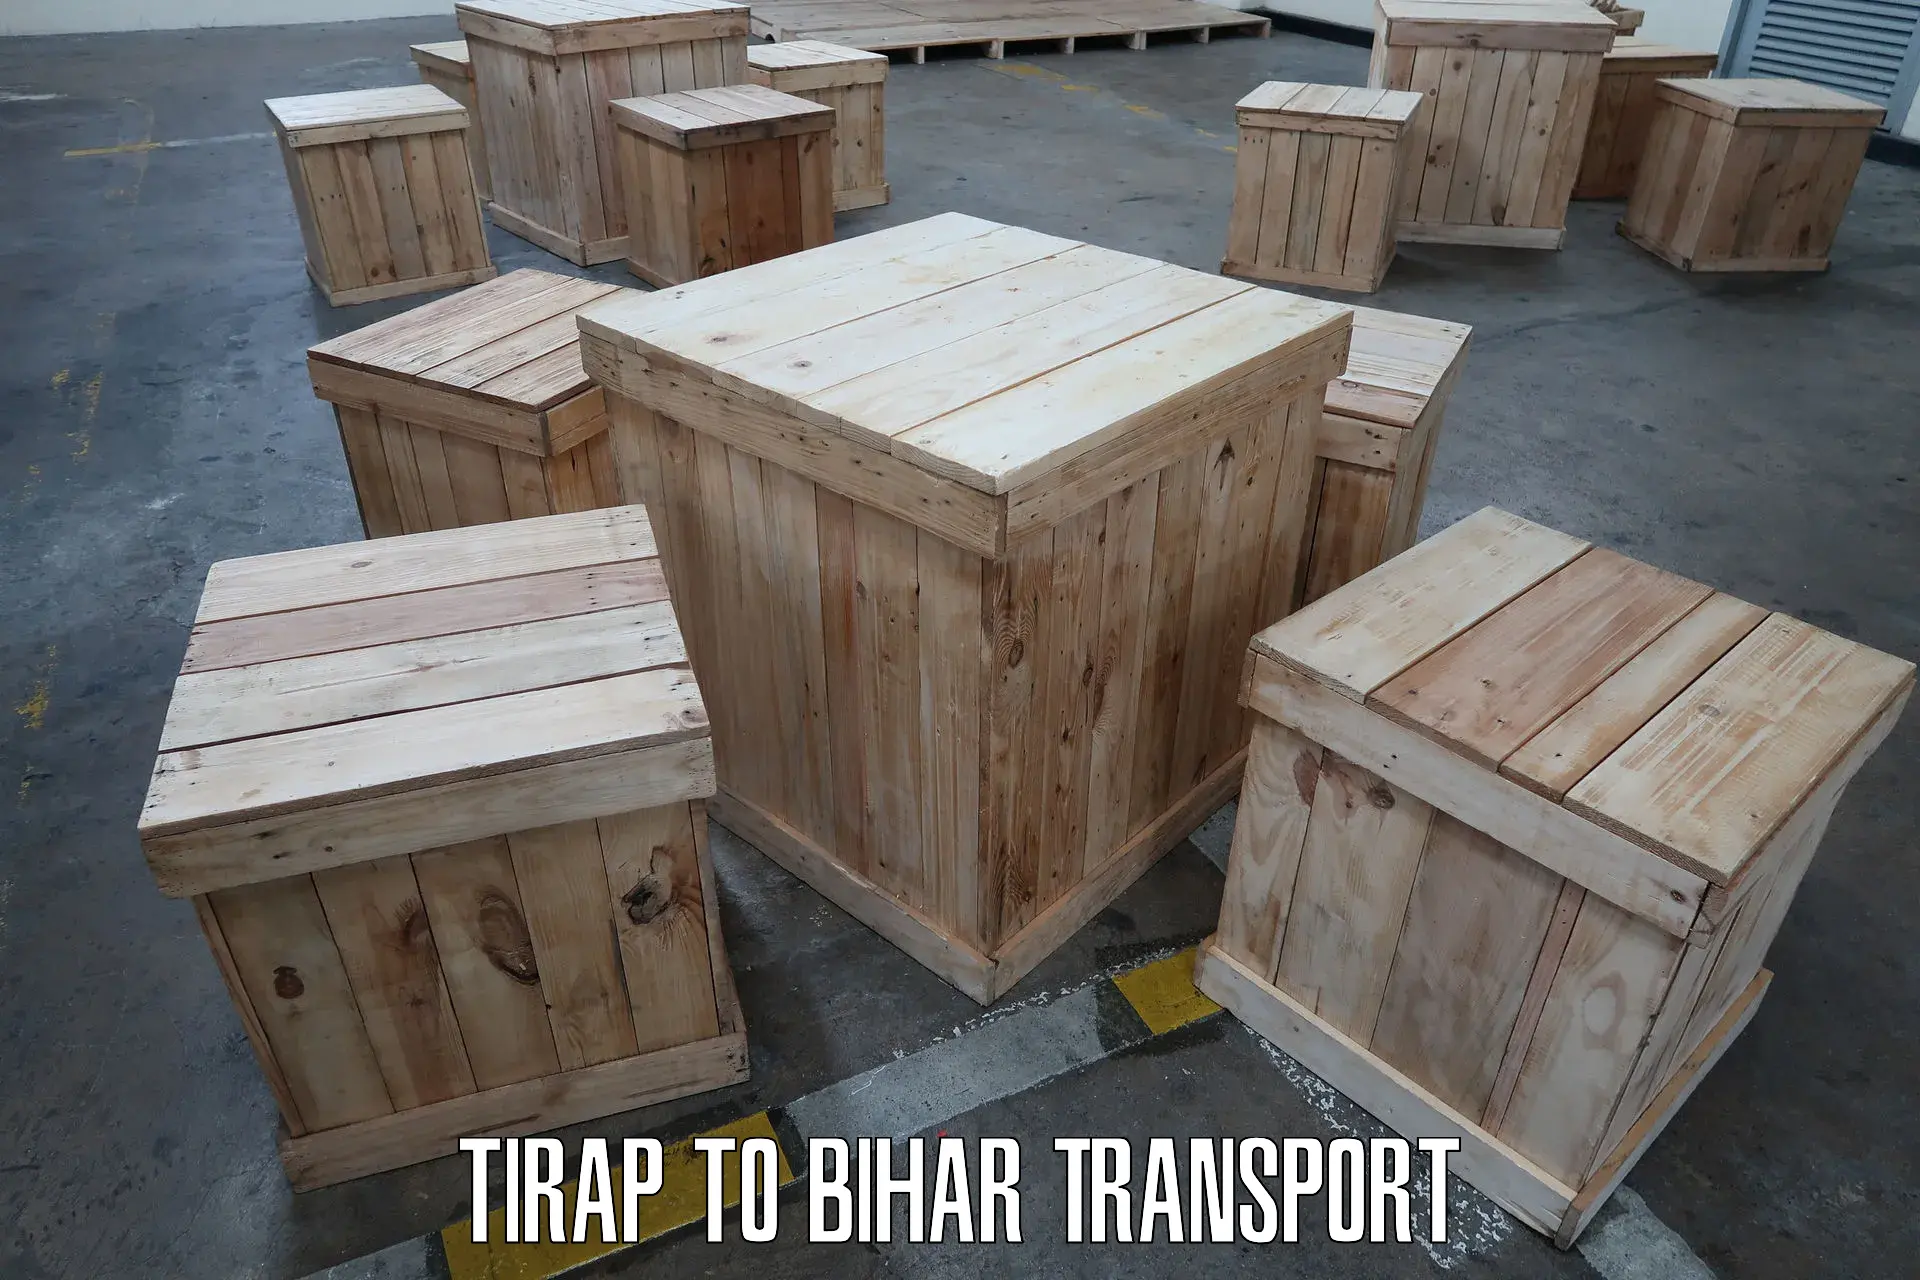 Express transport services Tirap to Bhorey